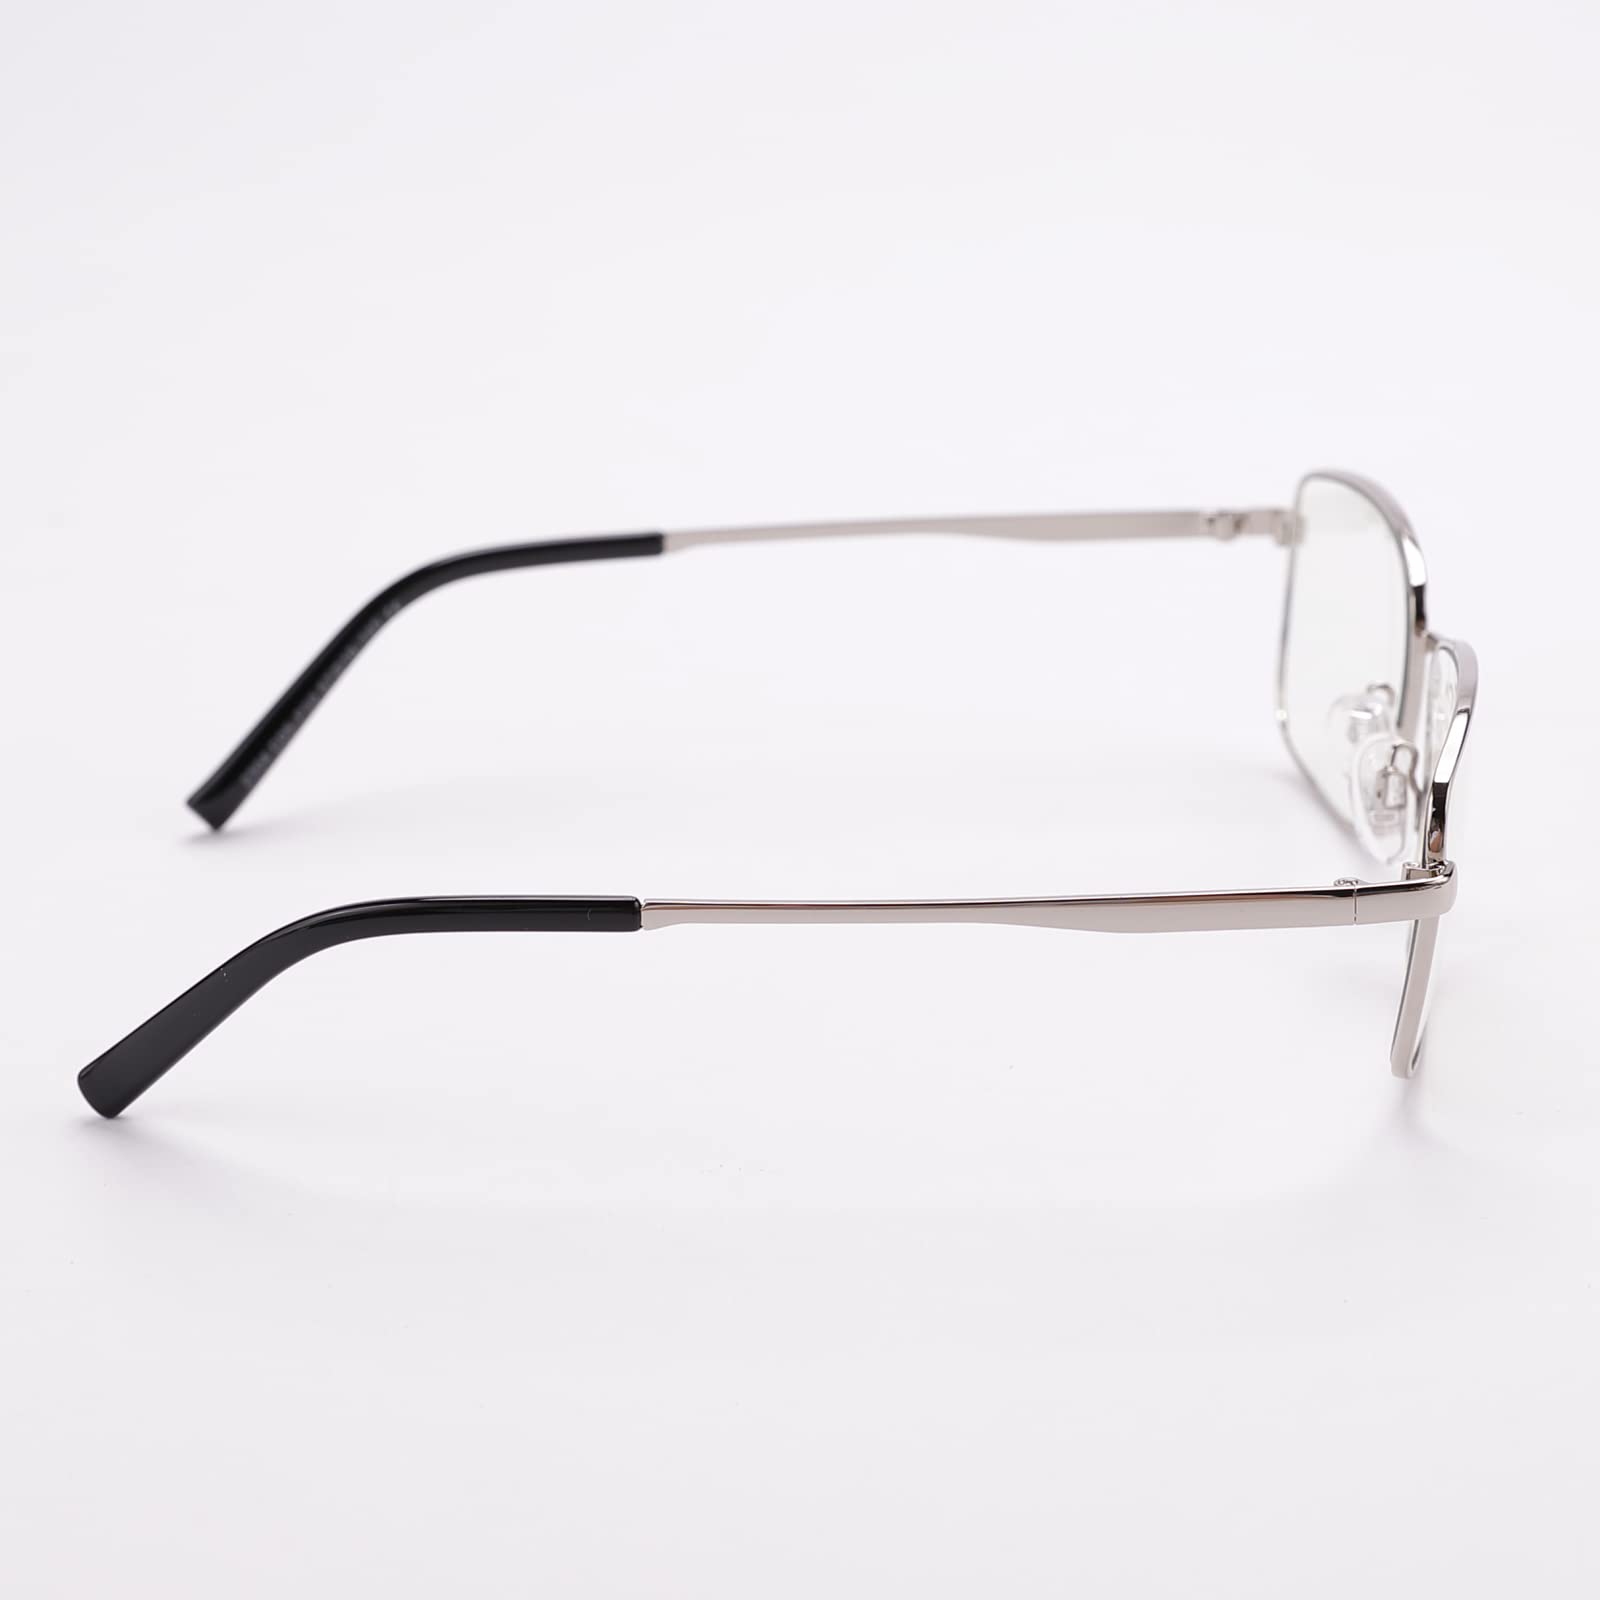 Intellilens Square Blue Cut Computer Glasses for Eye Protection | Zero Power, Anti Glare & Blue Light Filter Glasses | UV Protection Eye Glass for Men & Women (Silver) (57-16-145)